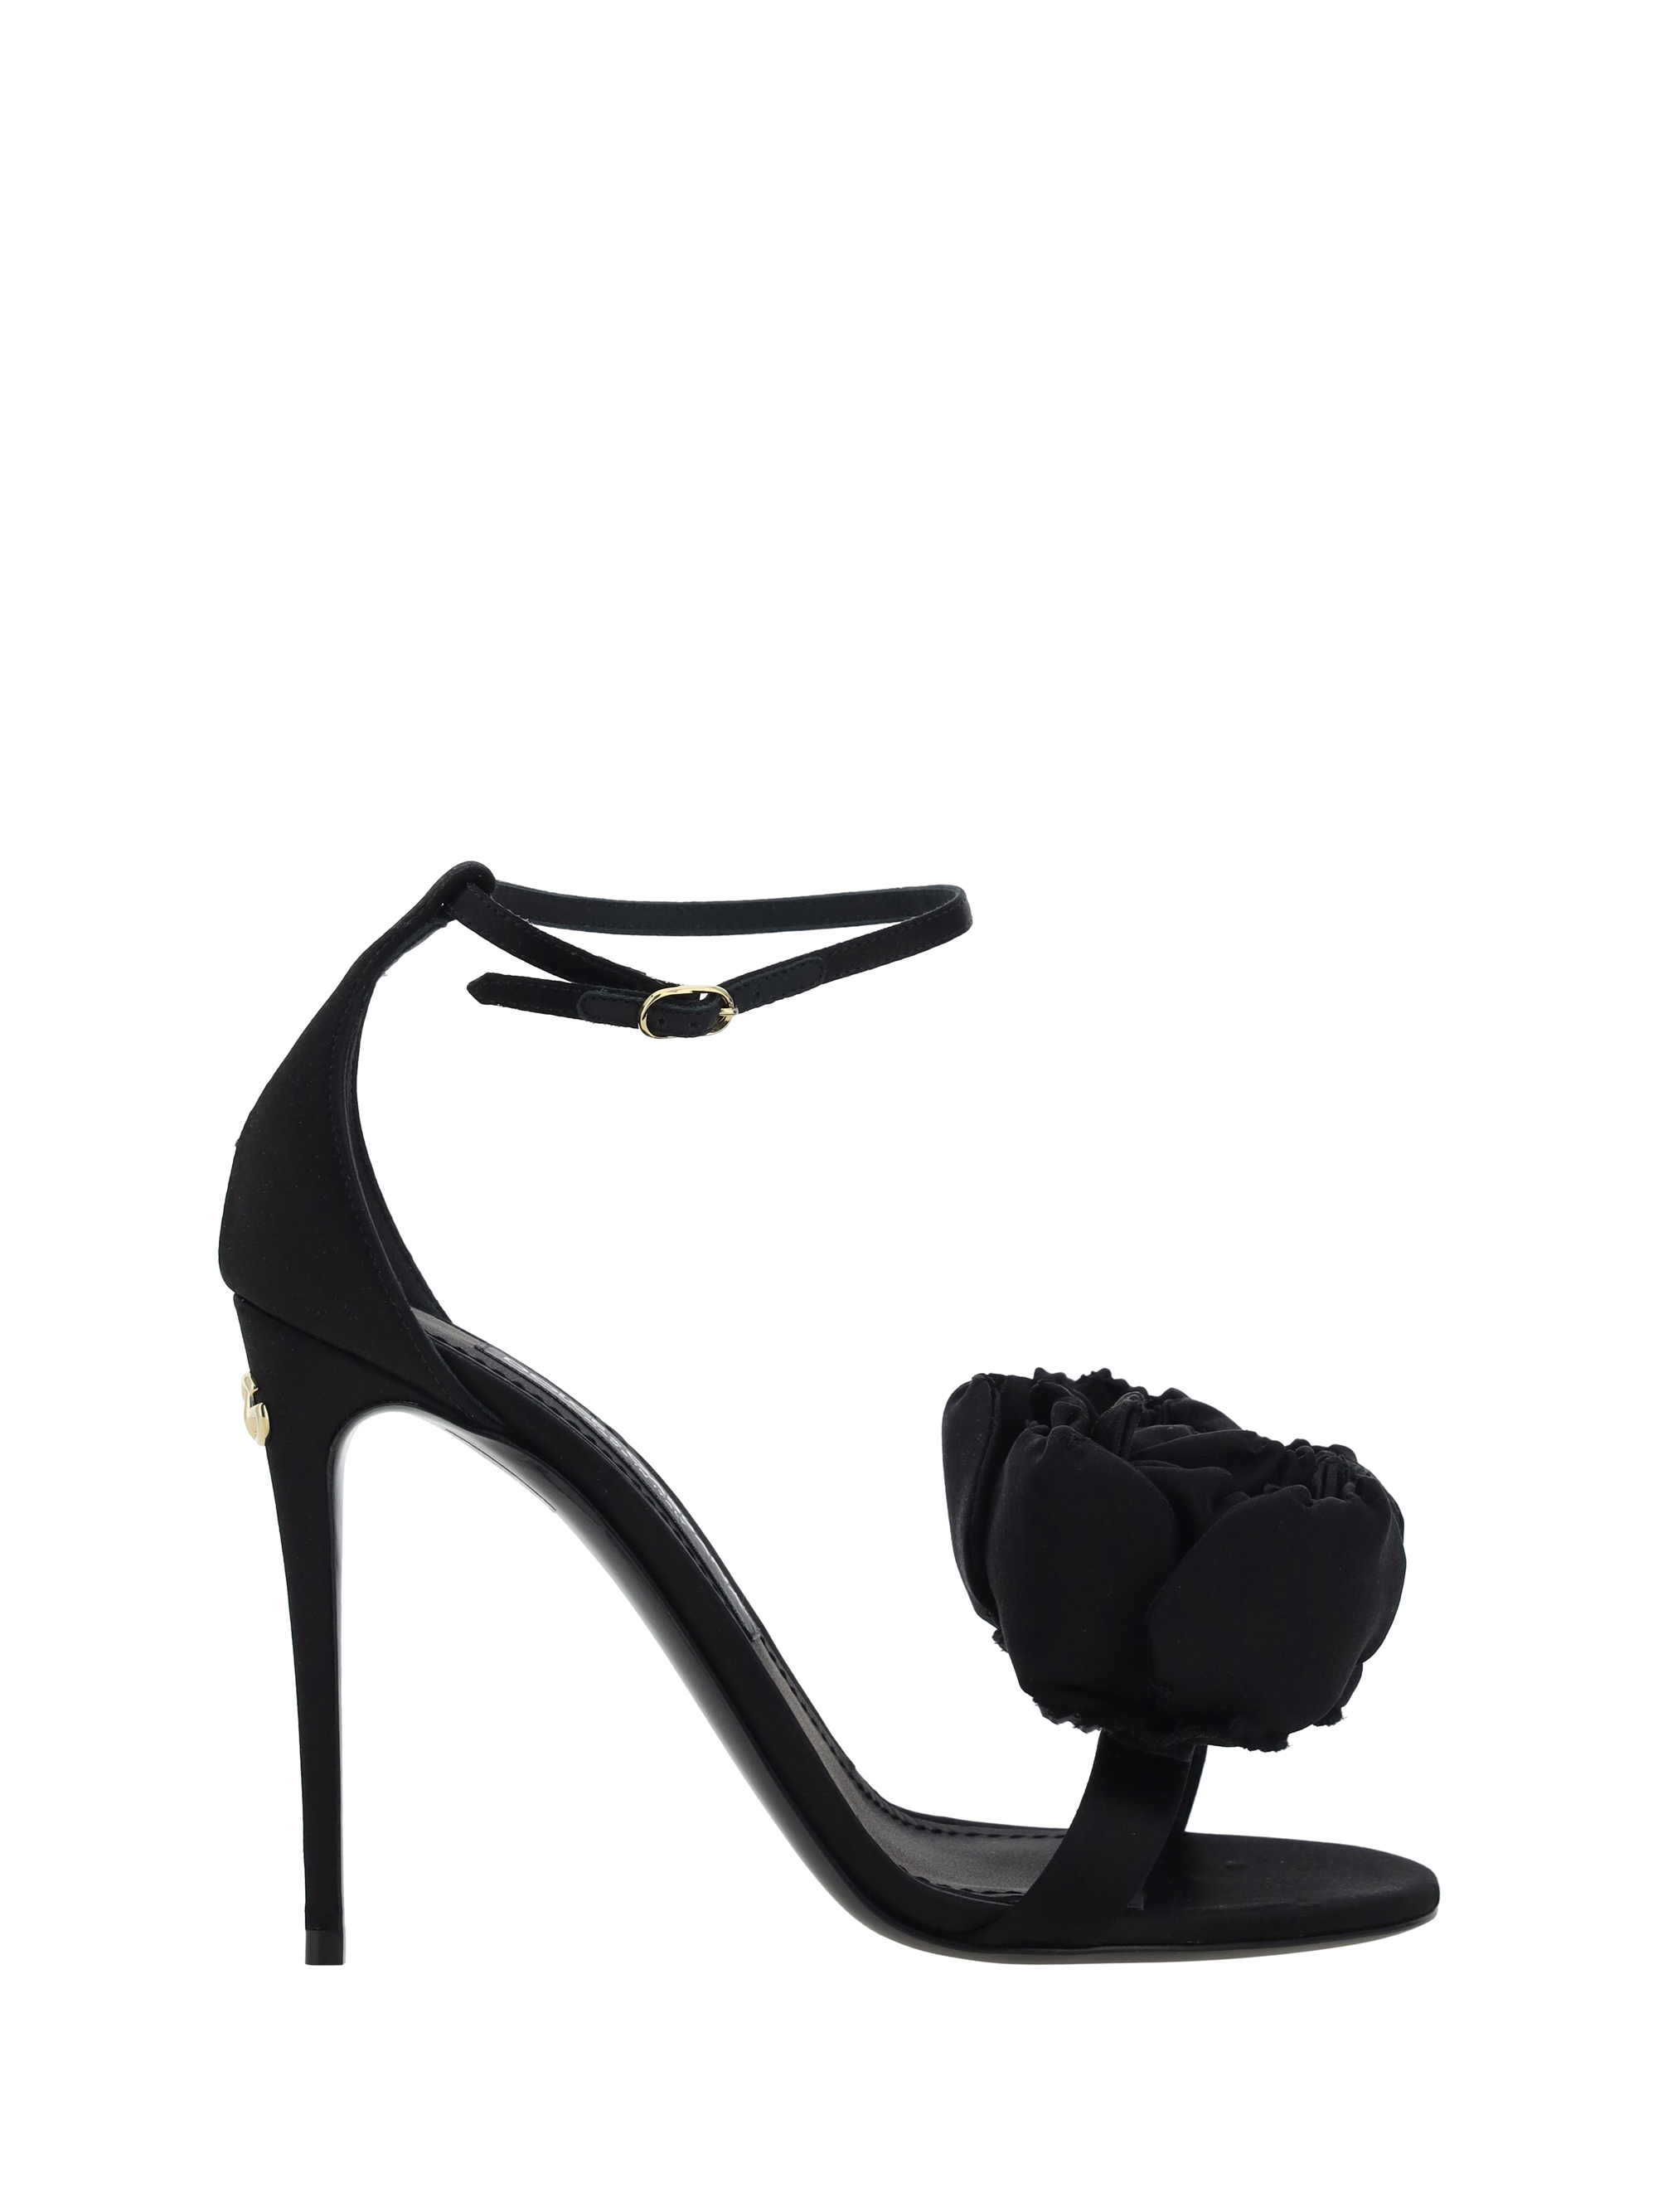 Dolce & Gabbana Sandals In Nero/nero